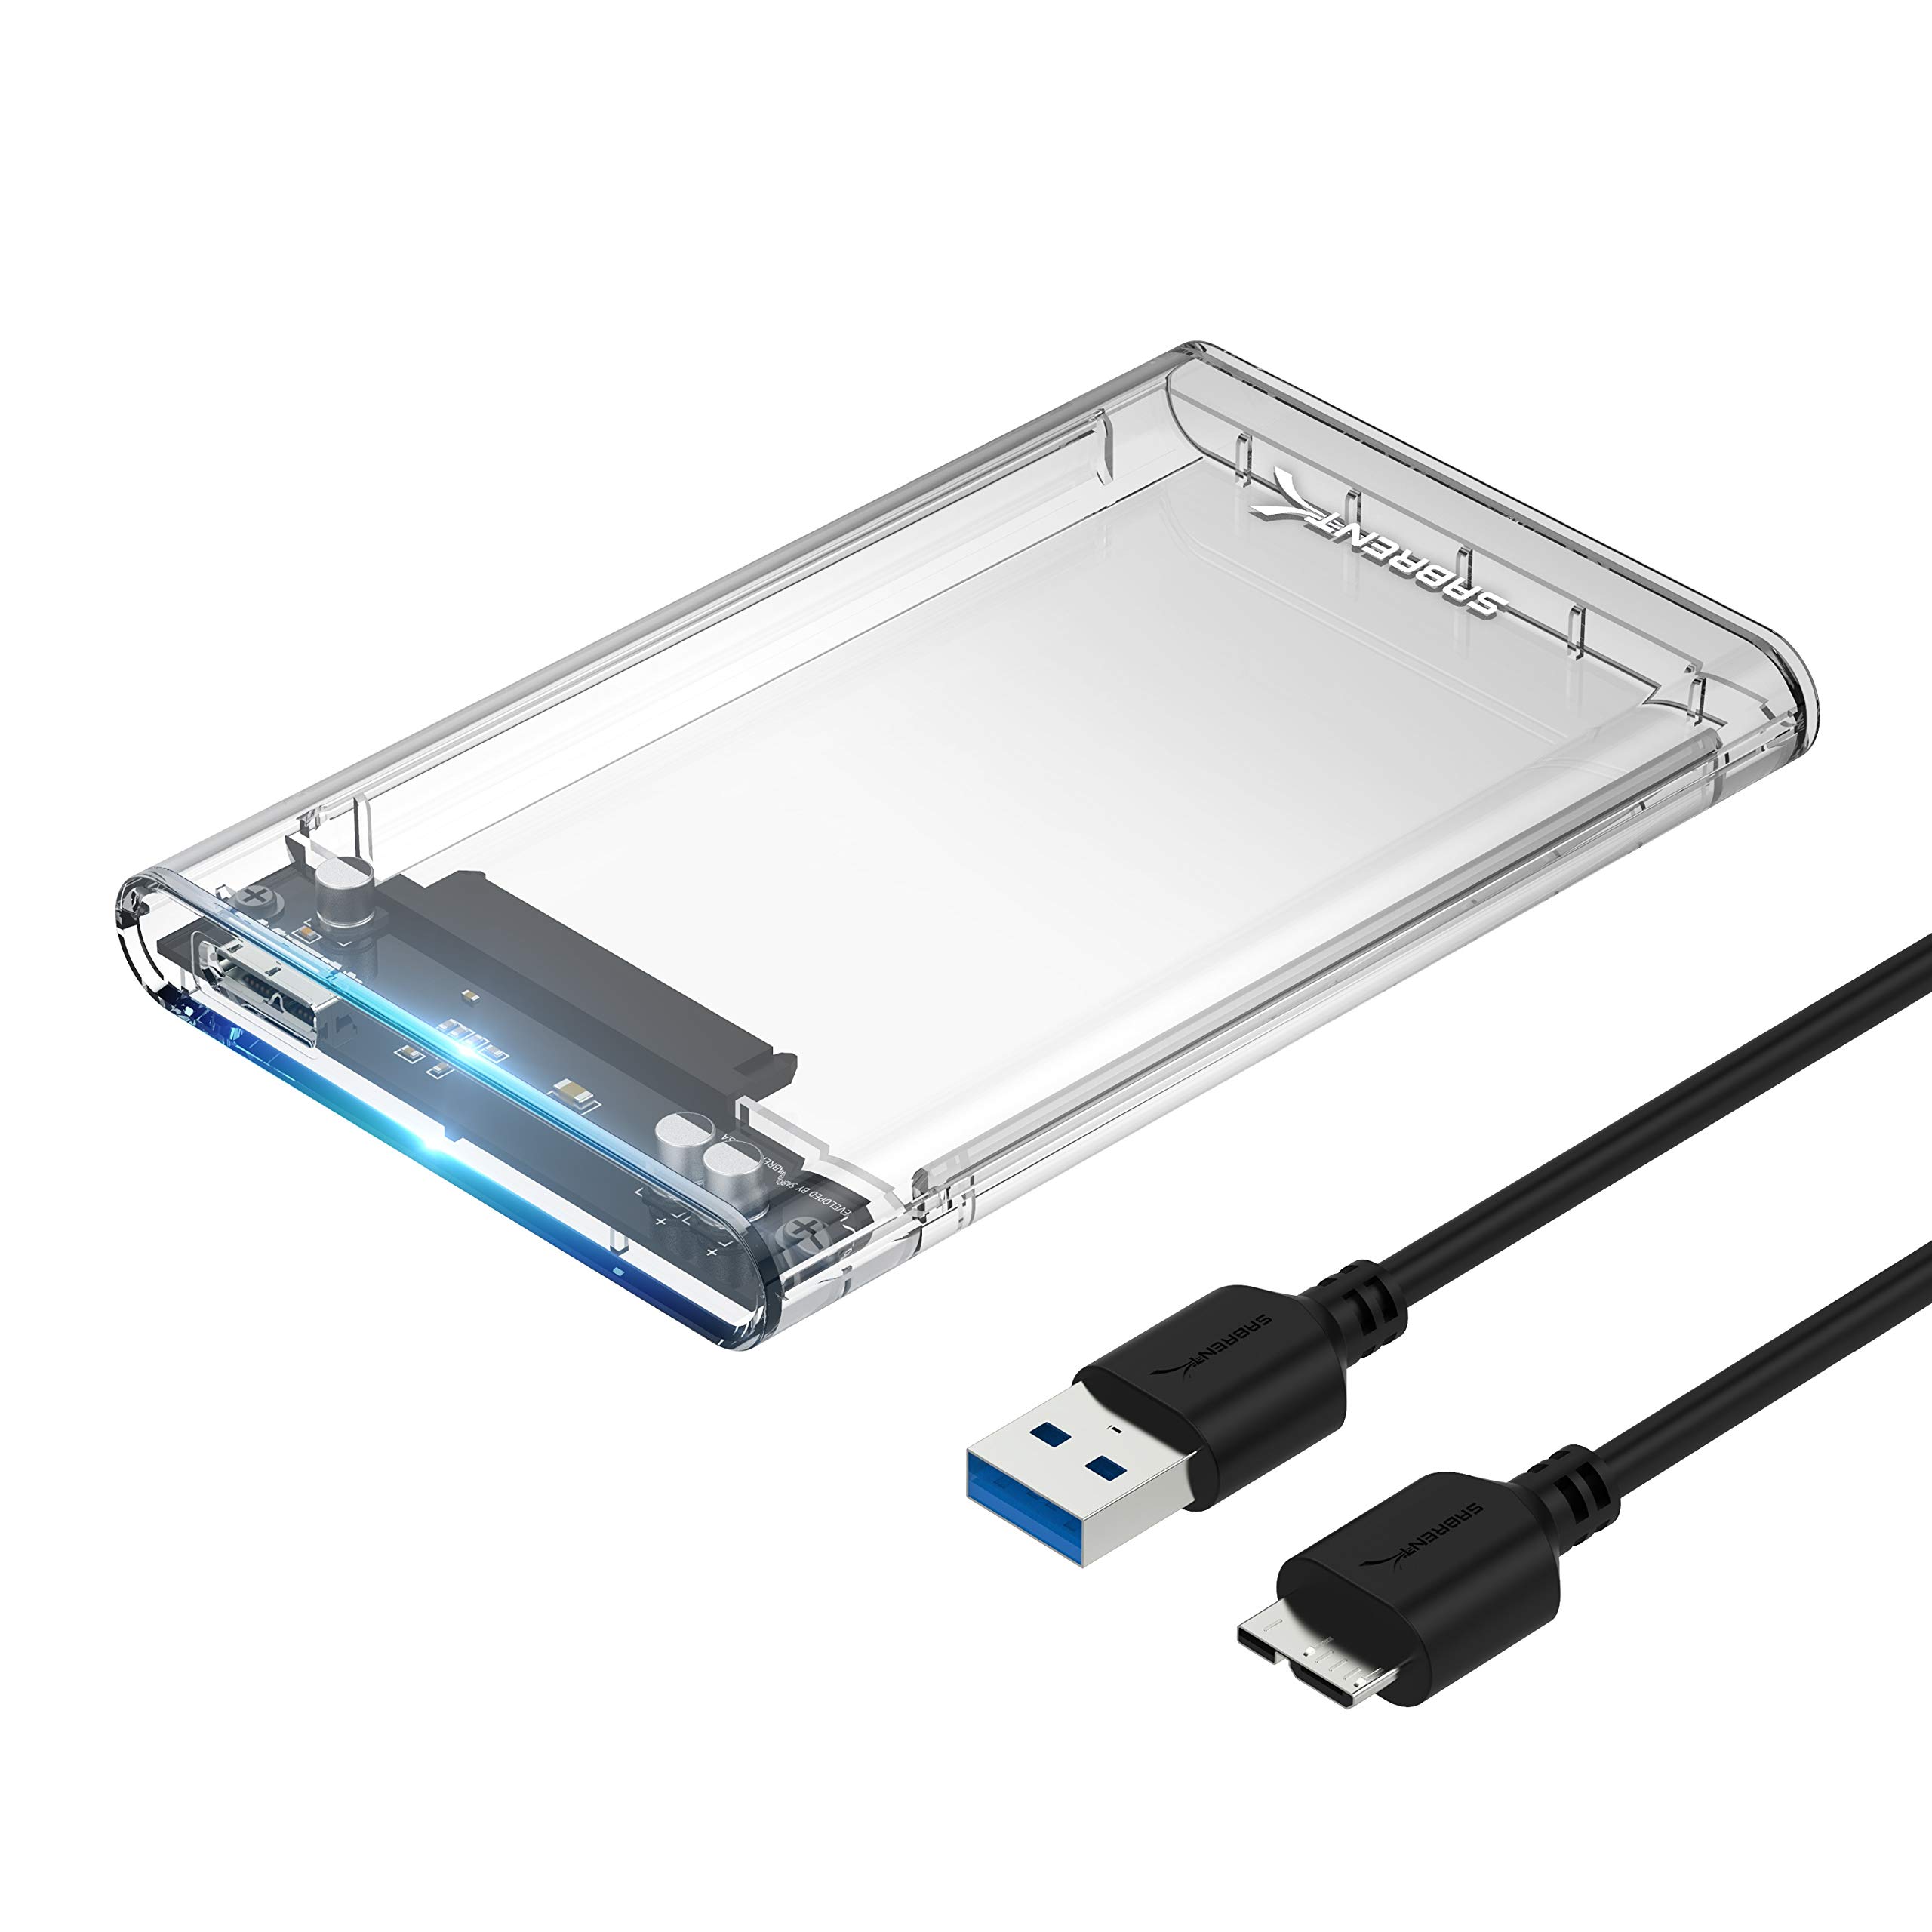 SABRENT 2.5 Inch SATA to USB 3.0 Tool Free Clear External Hard Drive Enclosure [Optimized for SSD, Supports UASP SATA III] (EC-OCUB)